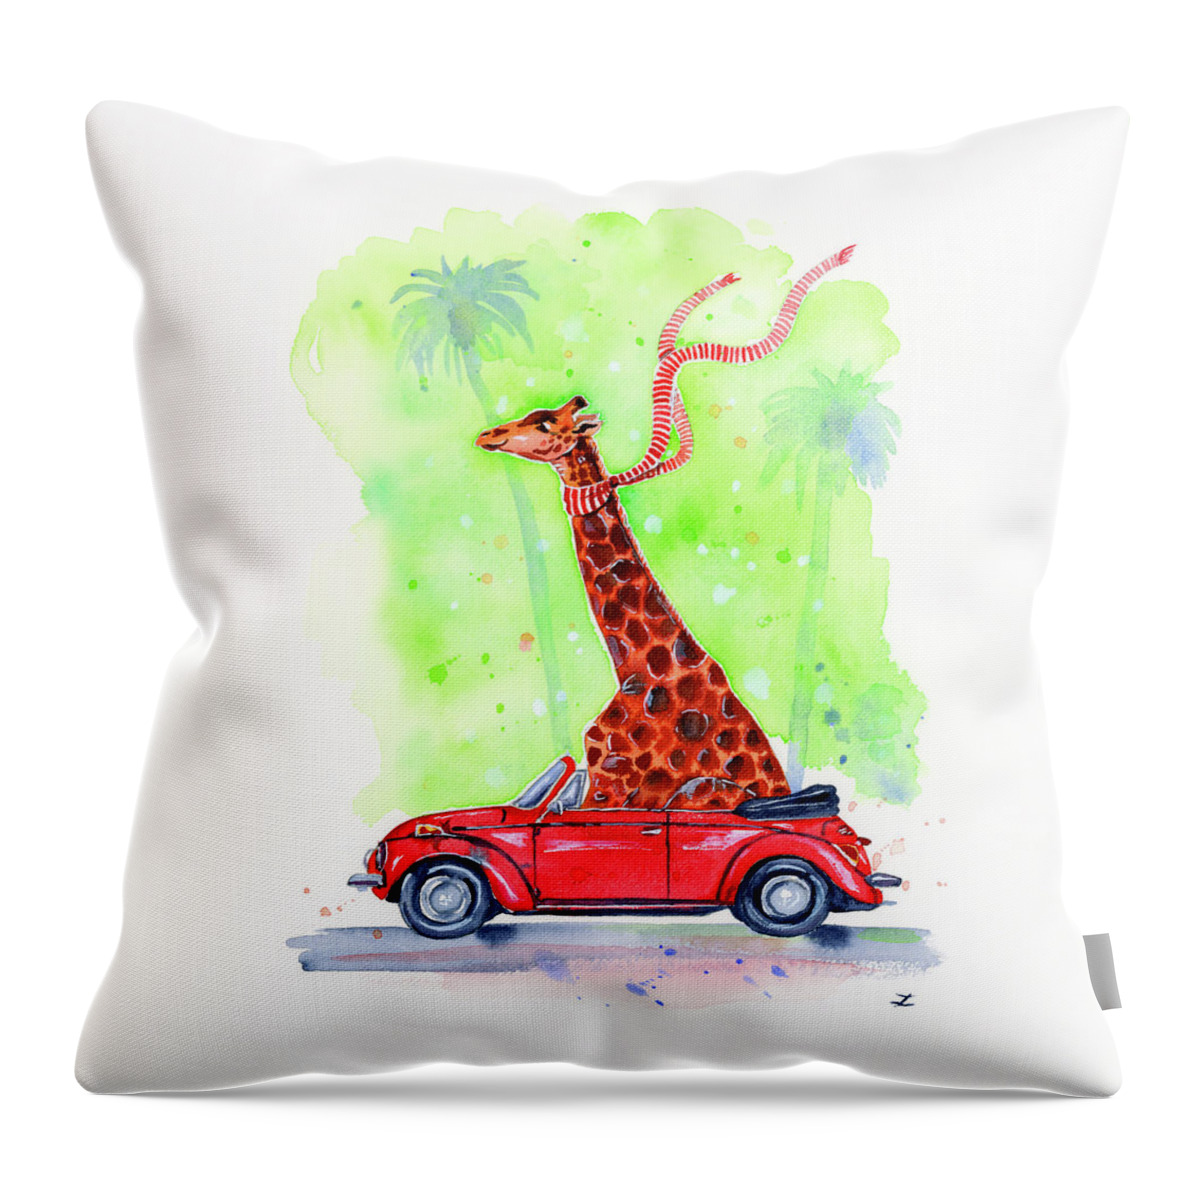 Funny Giraffe Throw Pillow featuring the painting Giraffe in a Beetle by Zaira Dzhaubaeva